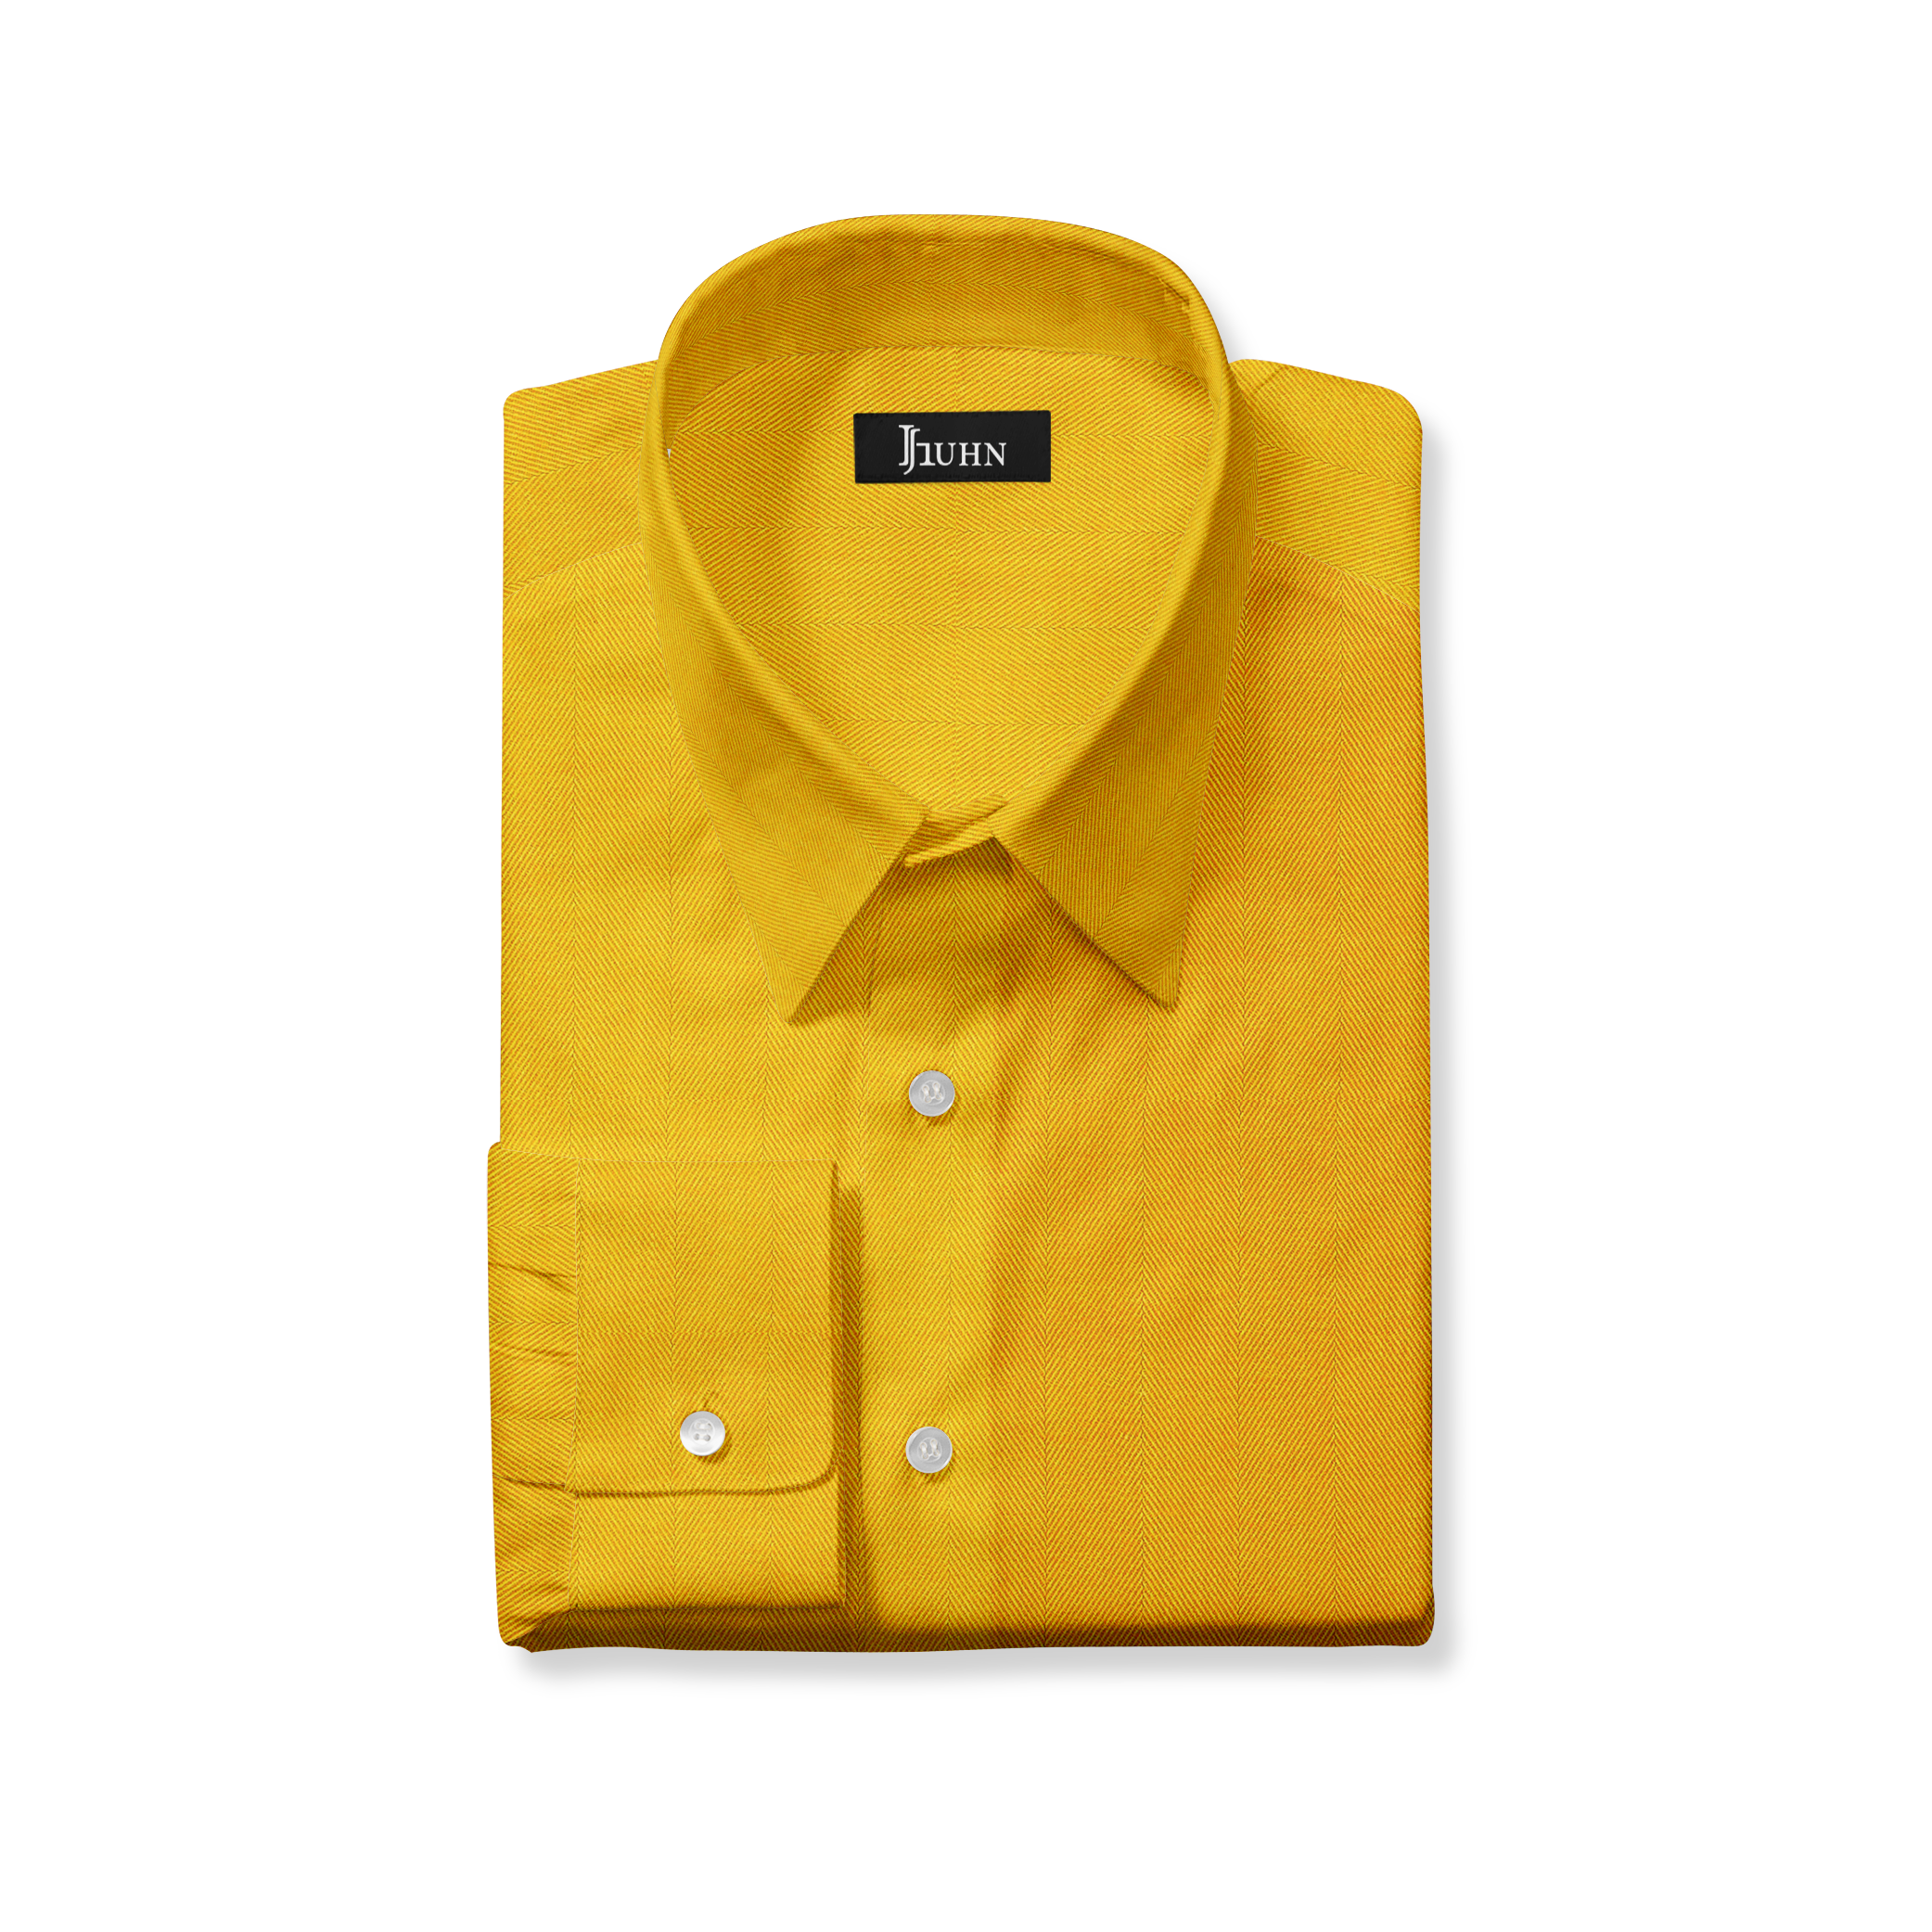 Apres Ski Bright Yellow  Shirt